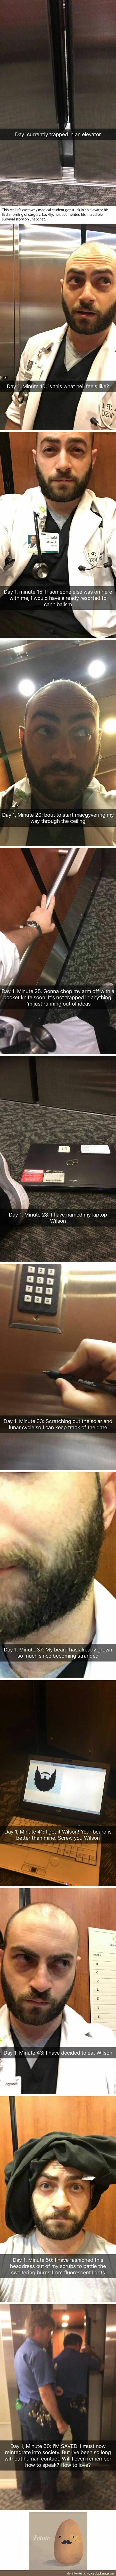 Elevator troubles